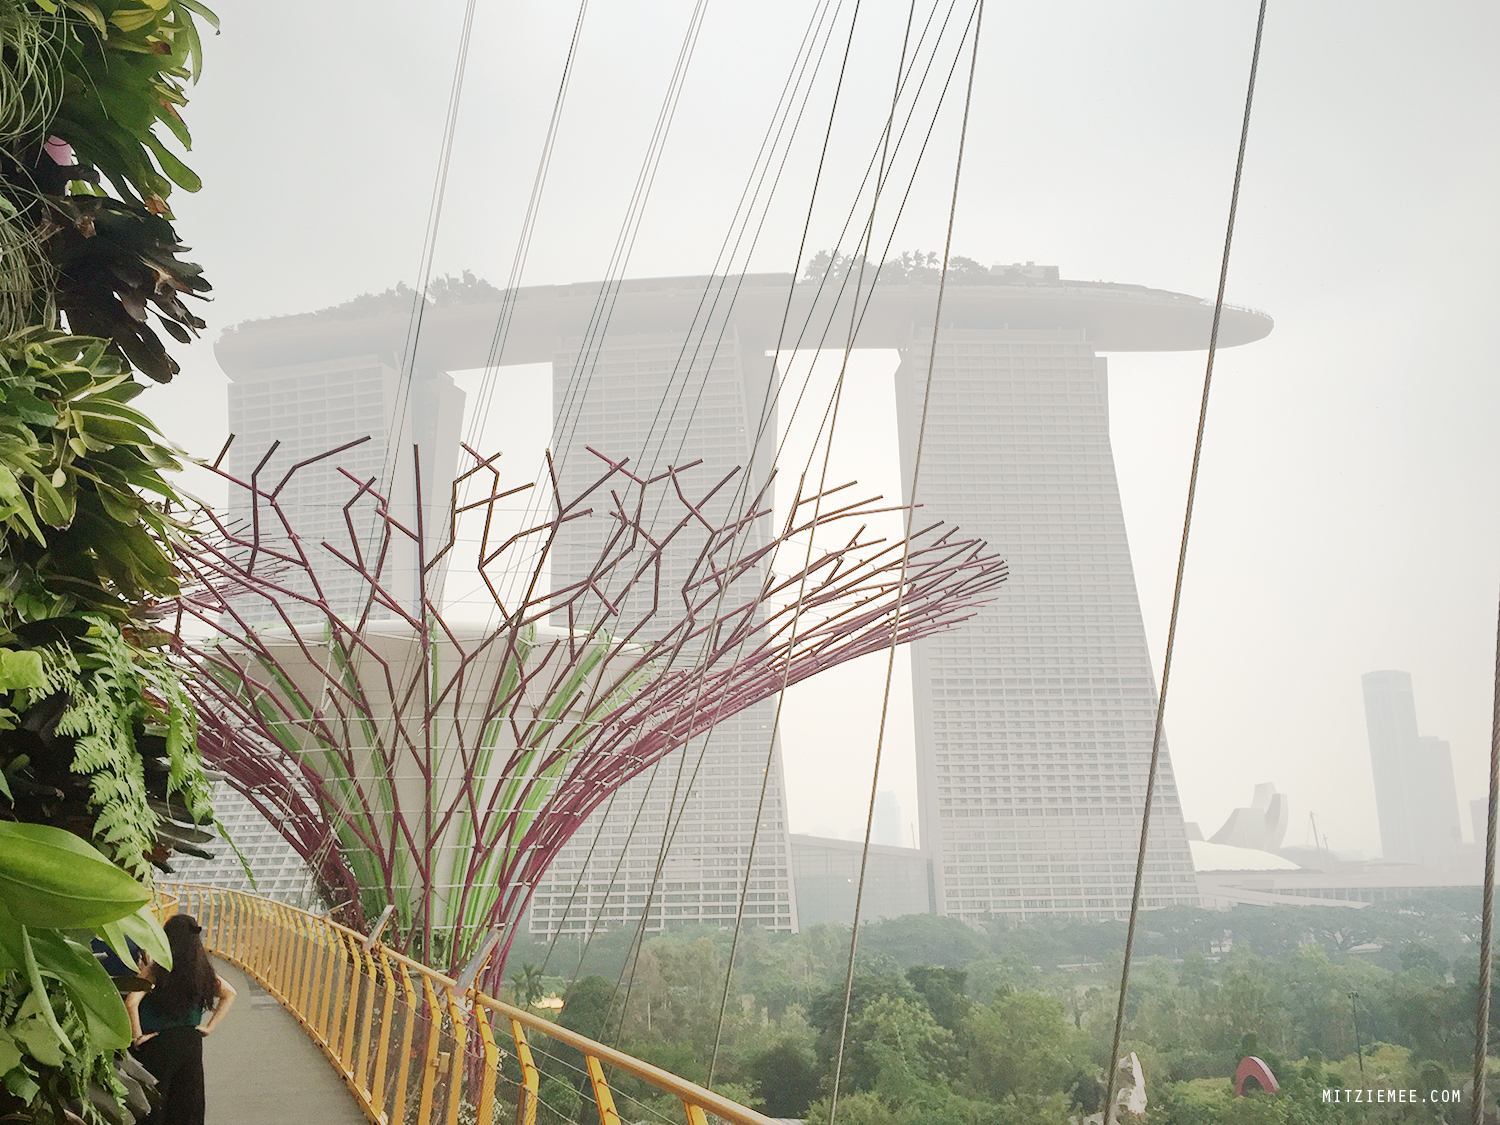 OCBC Skyway og Gardens by the Bay Singapore